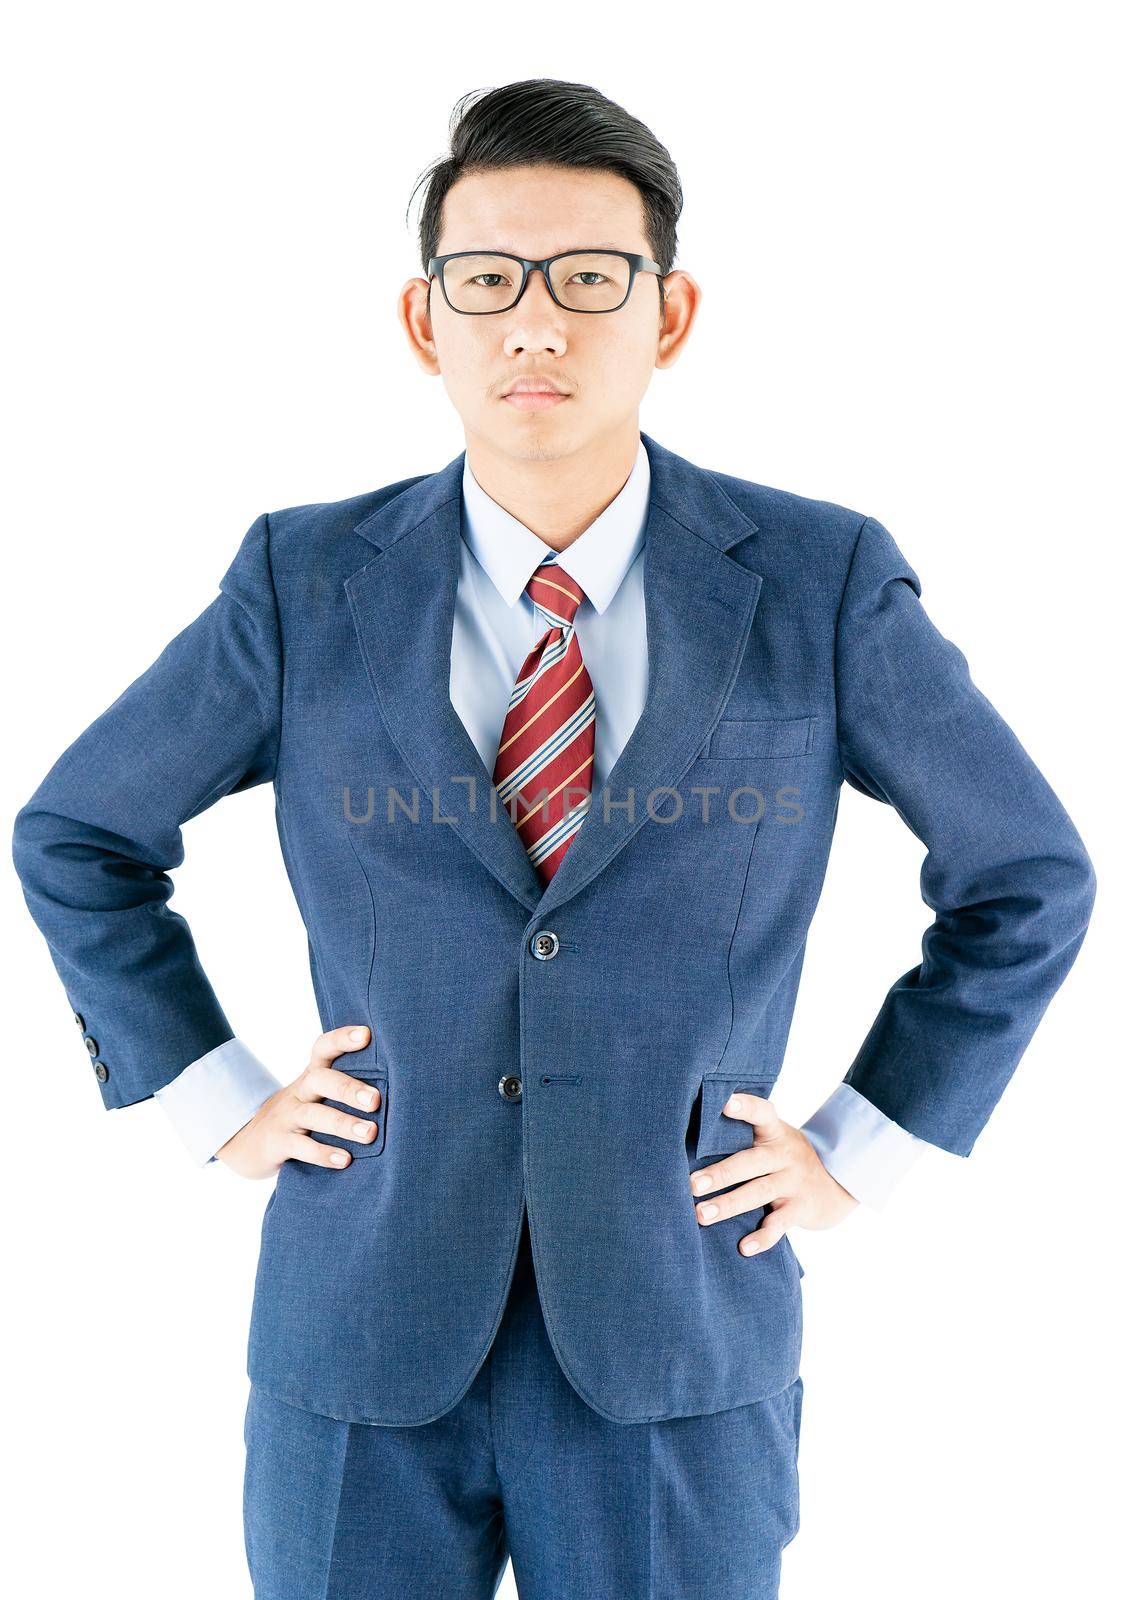 Businessman portrait in suit and wear glasses by stoonn